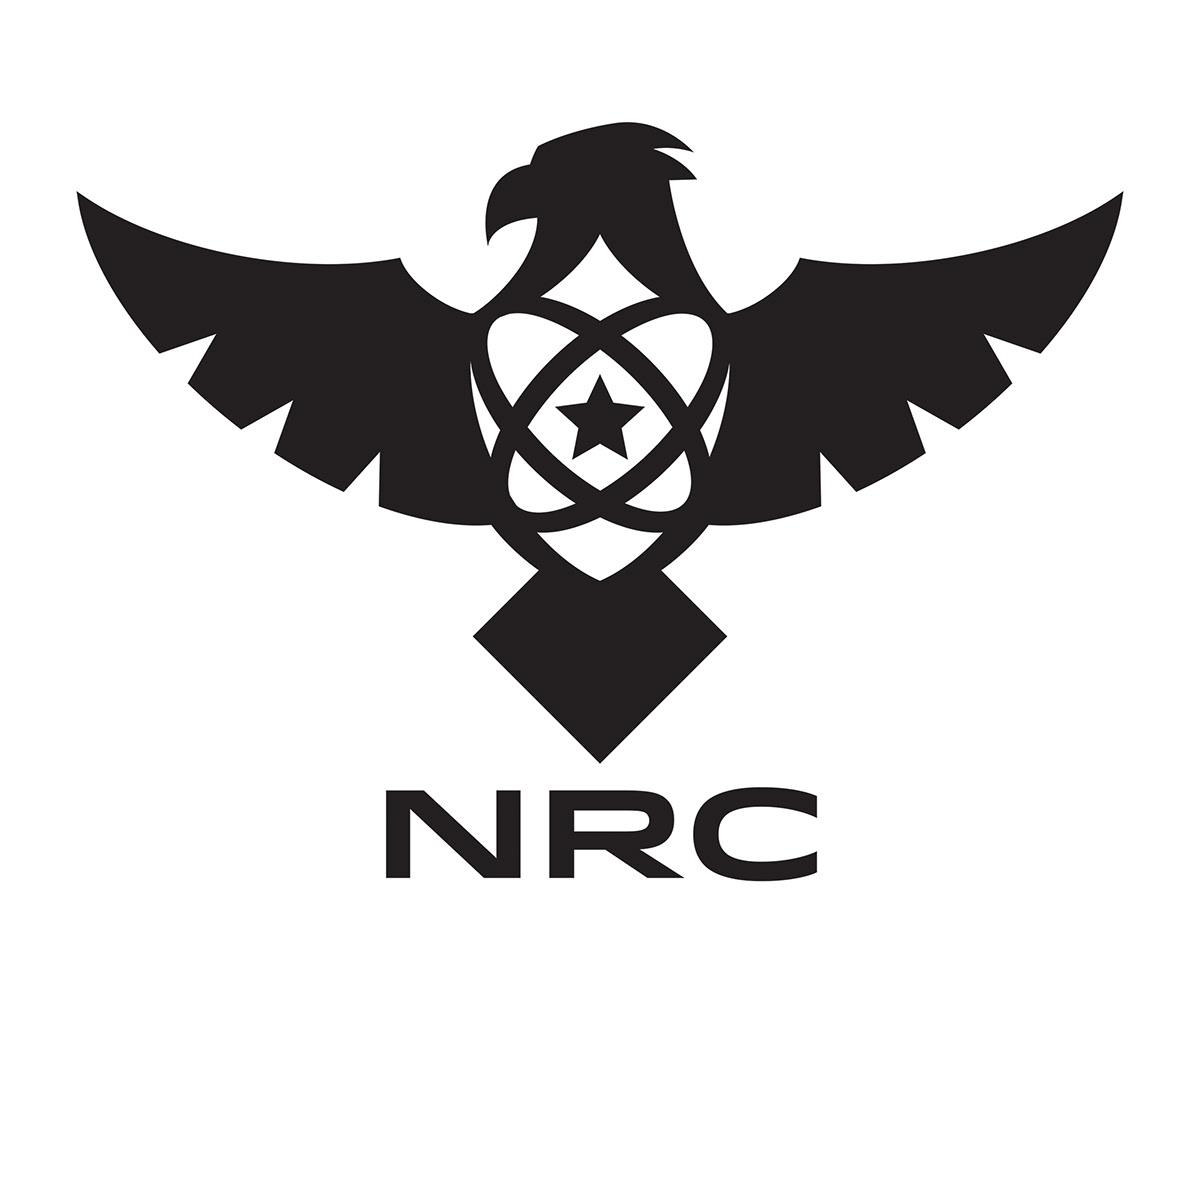 NRC logo nuclear